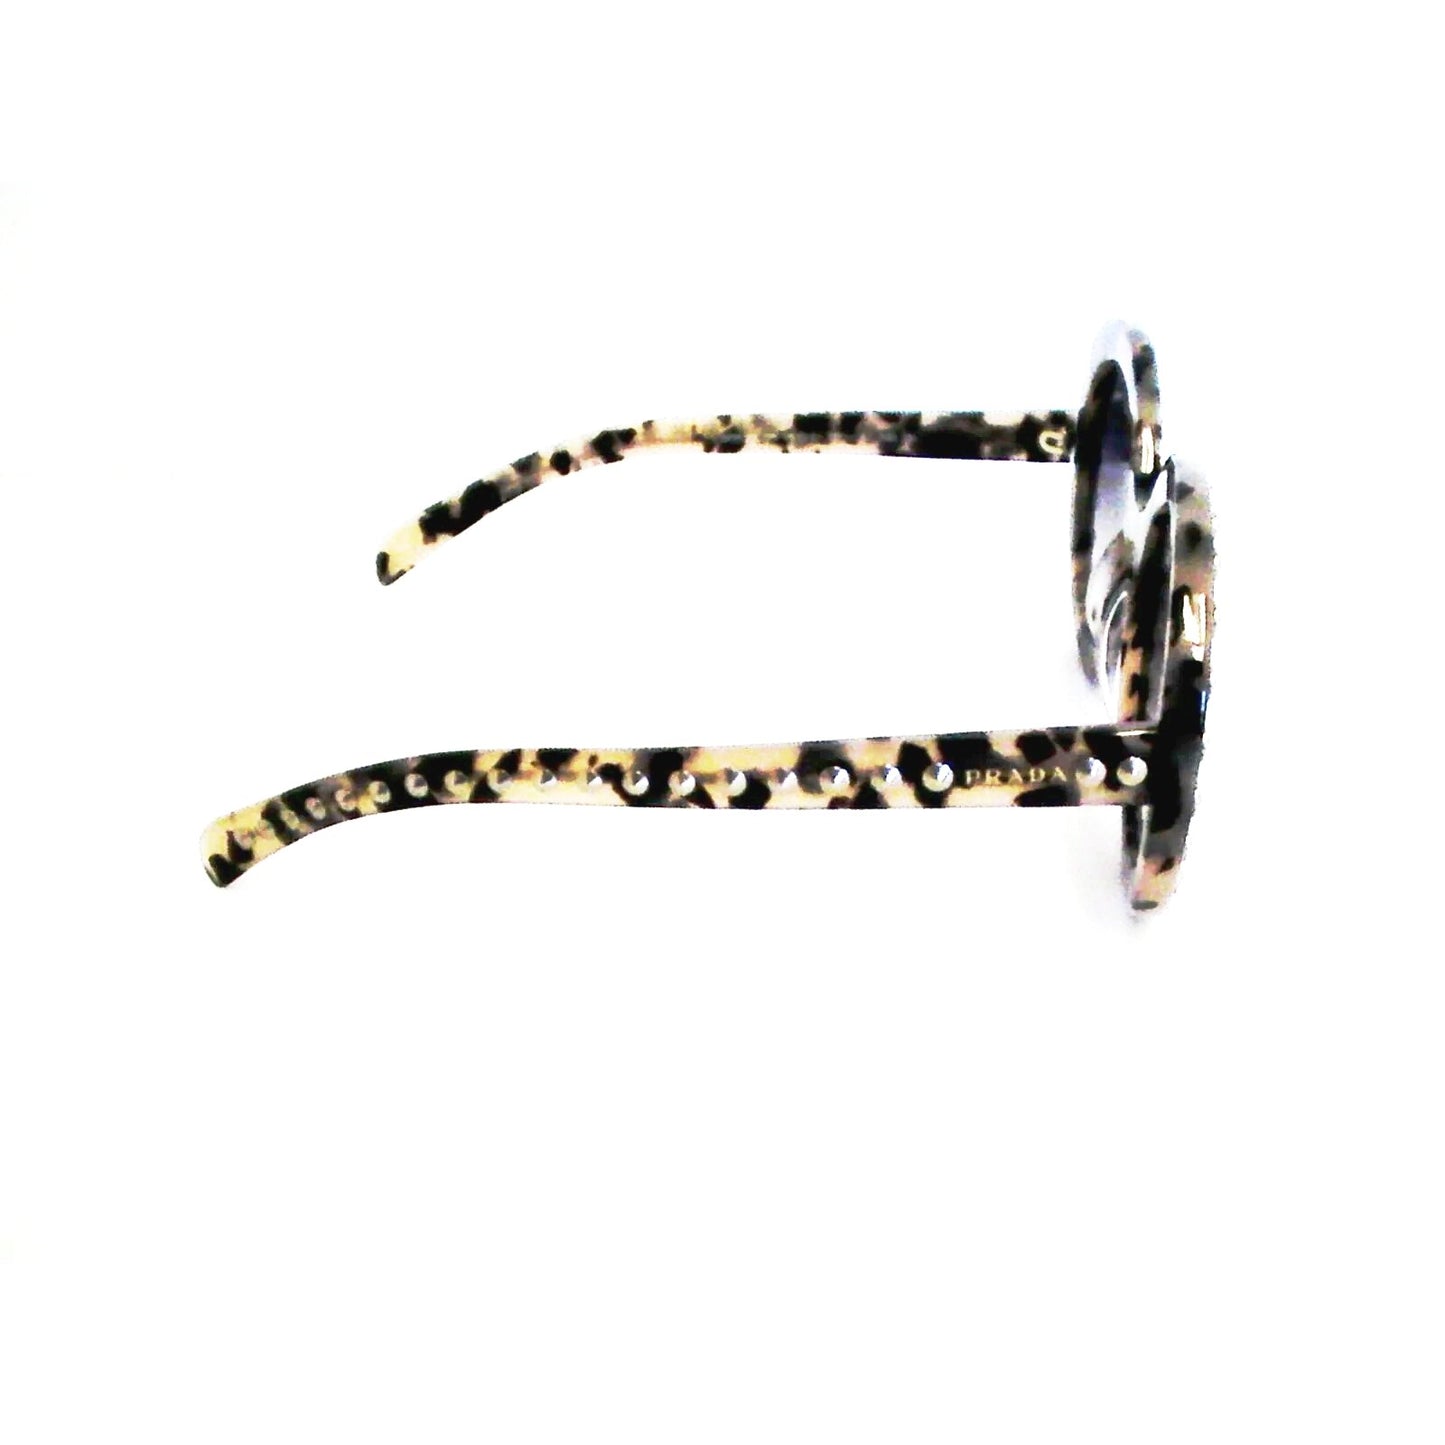 Womens PRADA New sunglasses black beige studded Baroque SPR29QSK authentic